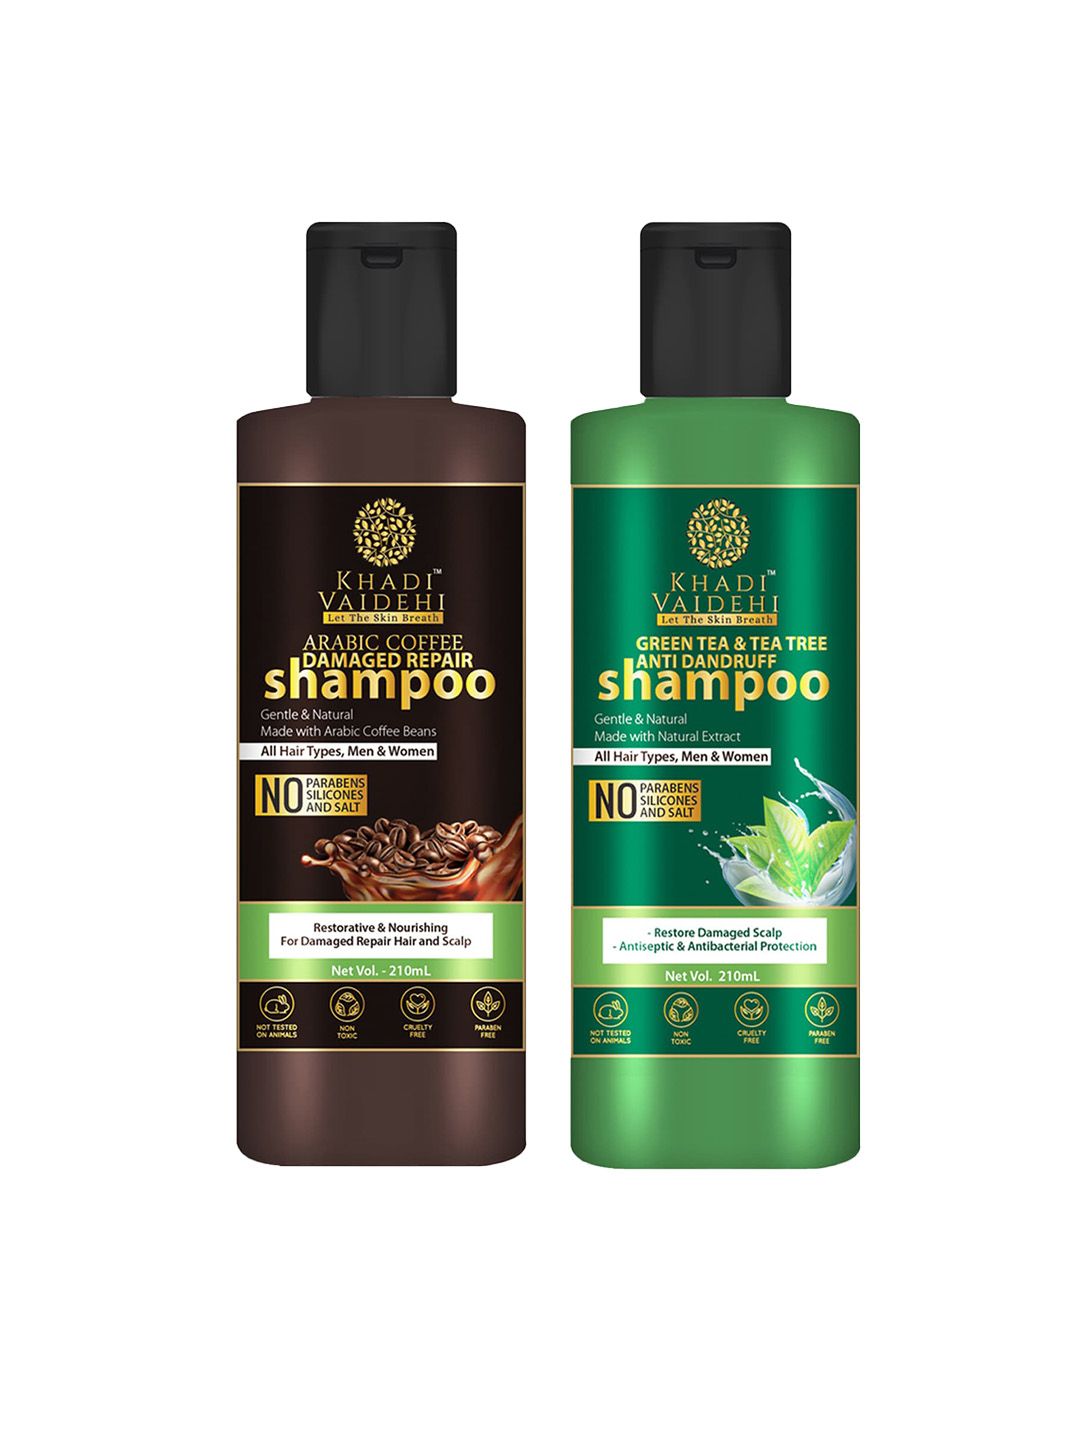 Khadi Vaidehi Set of 2 Paraben-Free Shampoos for All Hair Types - 210ml each Price in India